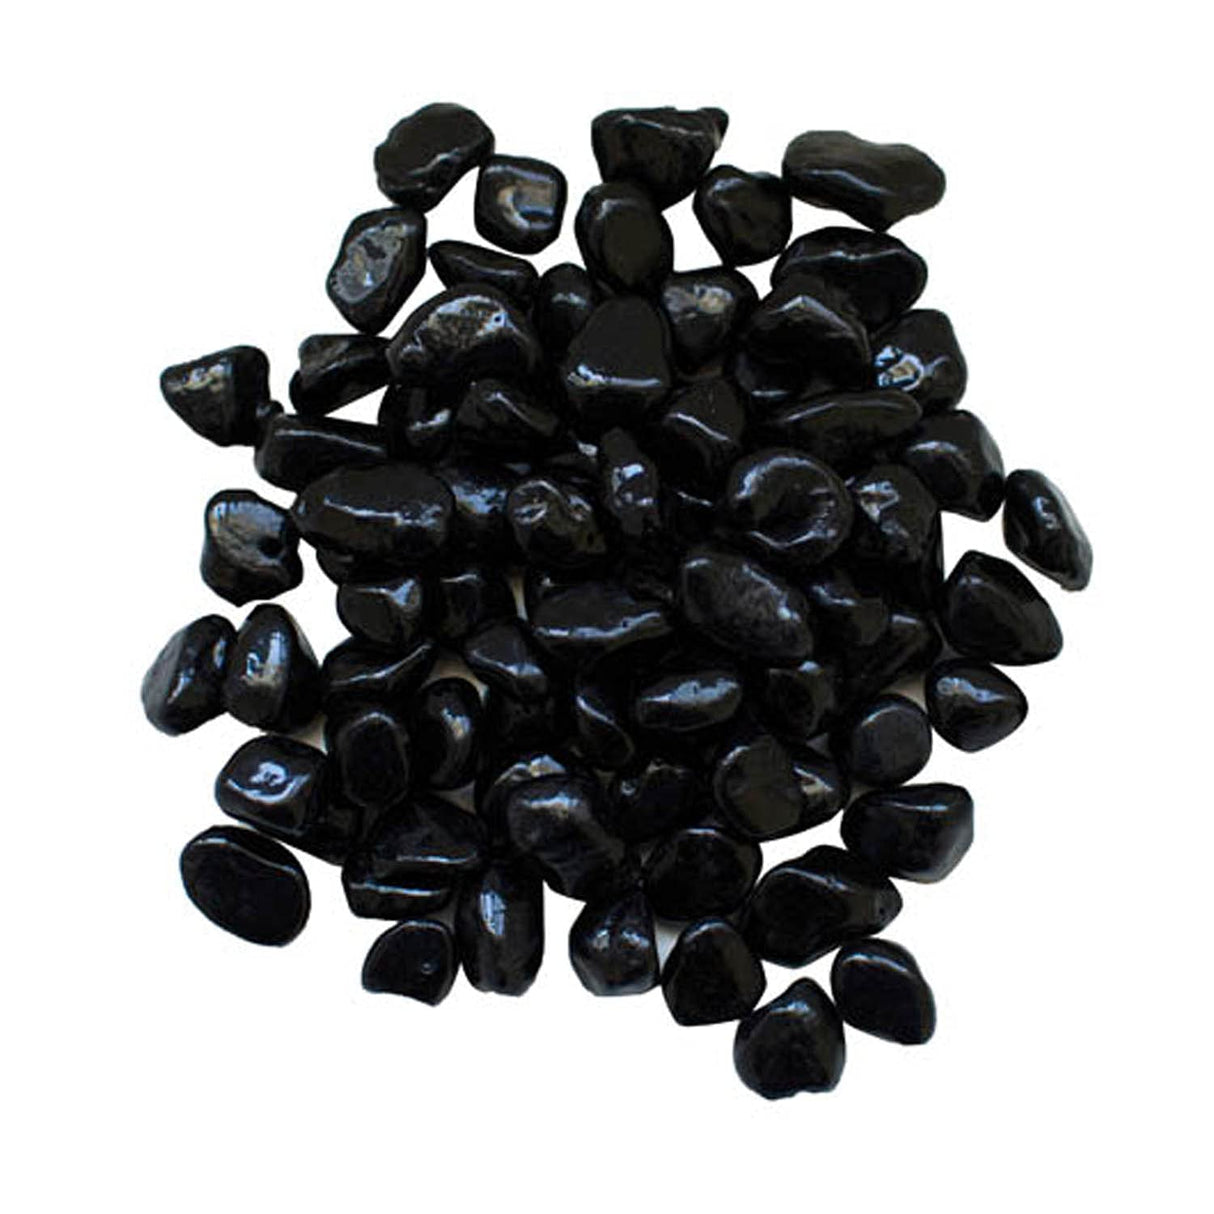 Amantii AMSF-GLASS-12 Black Small Beads Fireglass - 5lbs